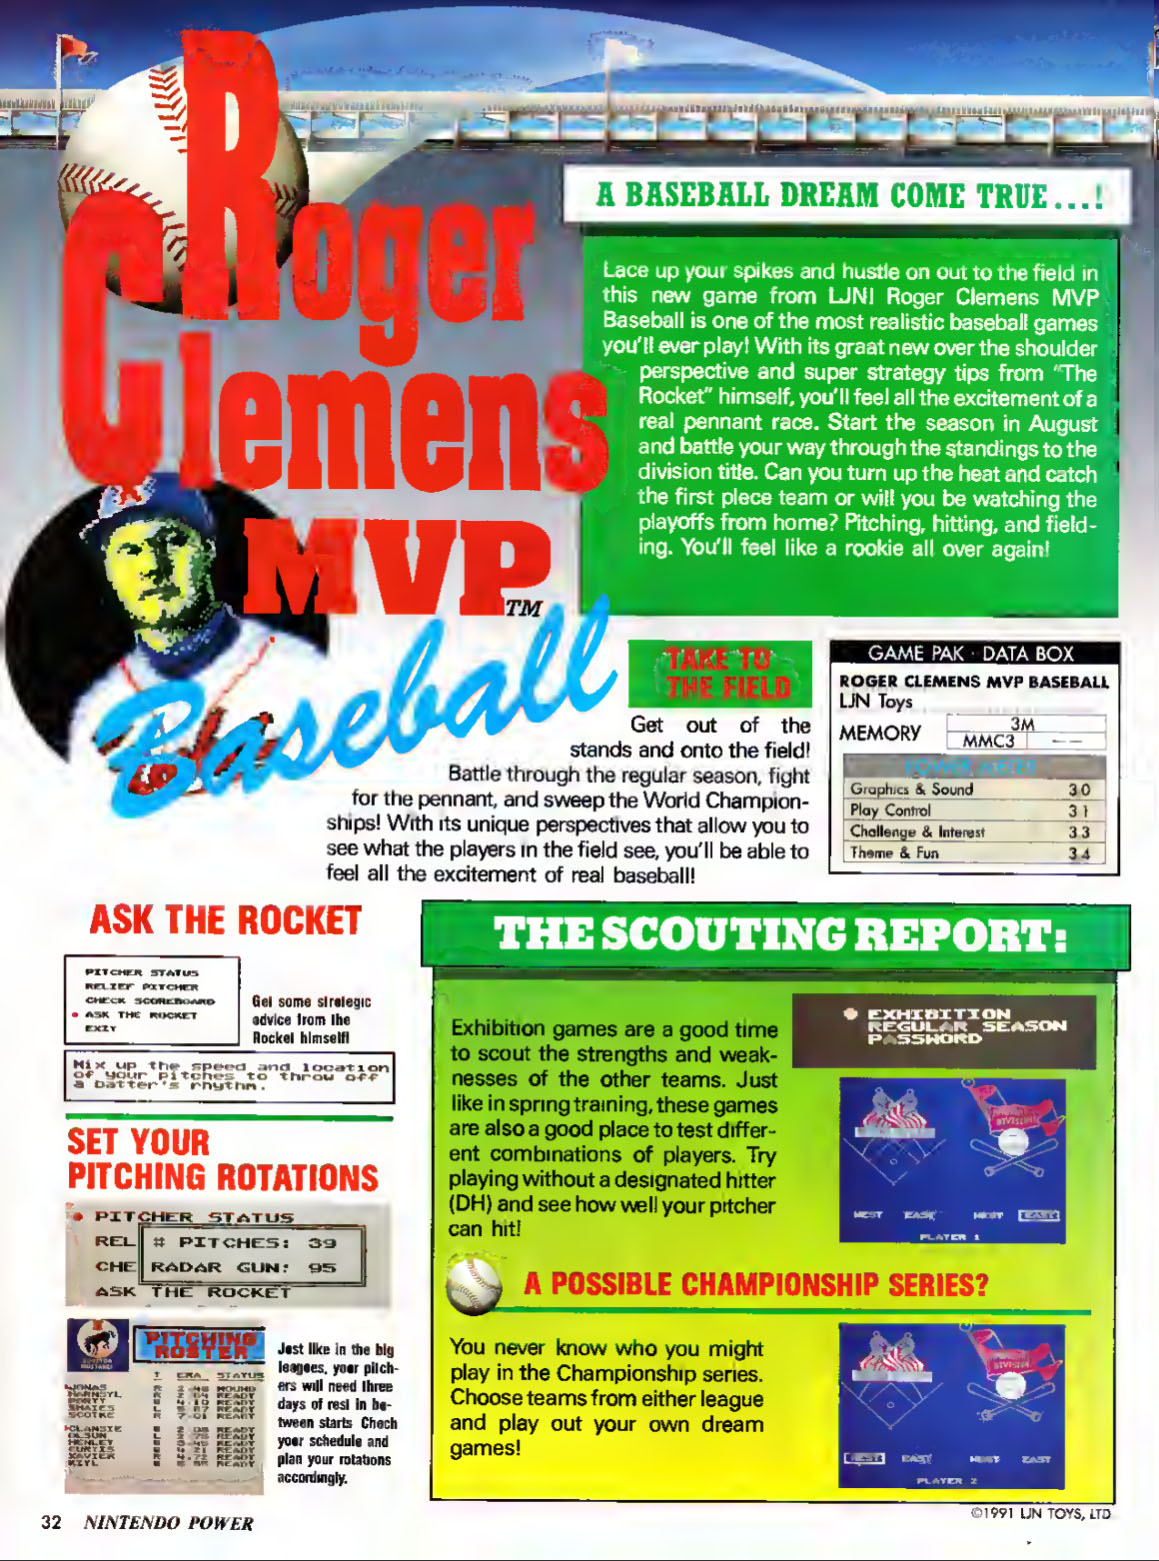 Roger Clemens MVP Baseball Review, Nintendo Power October 1991 page 32